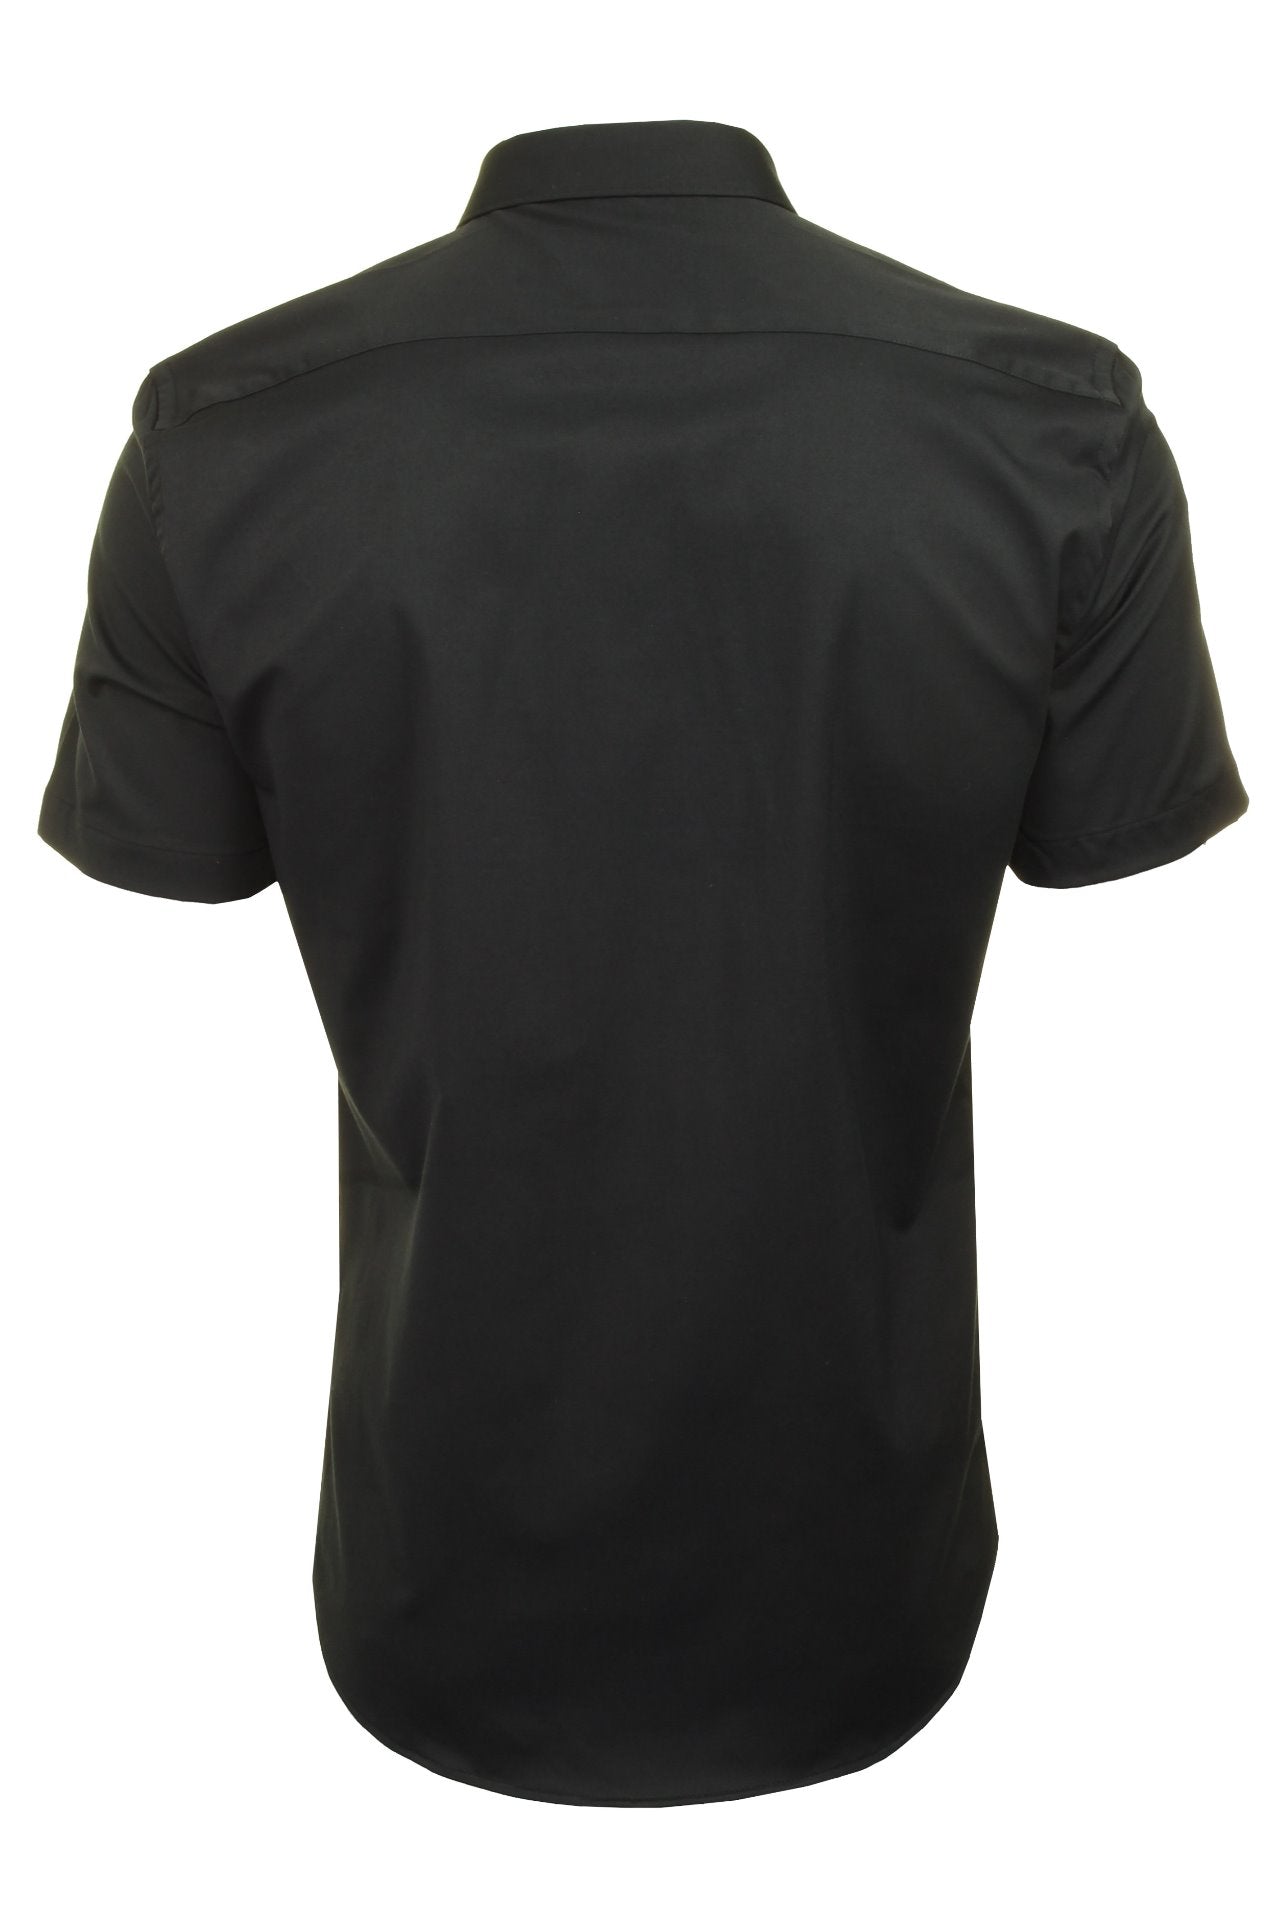 Xact Mens Short Sleeved Poplin Stretch Shirt - Slim Fit-3